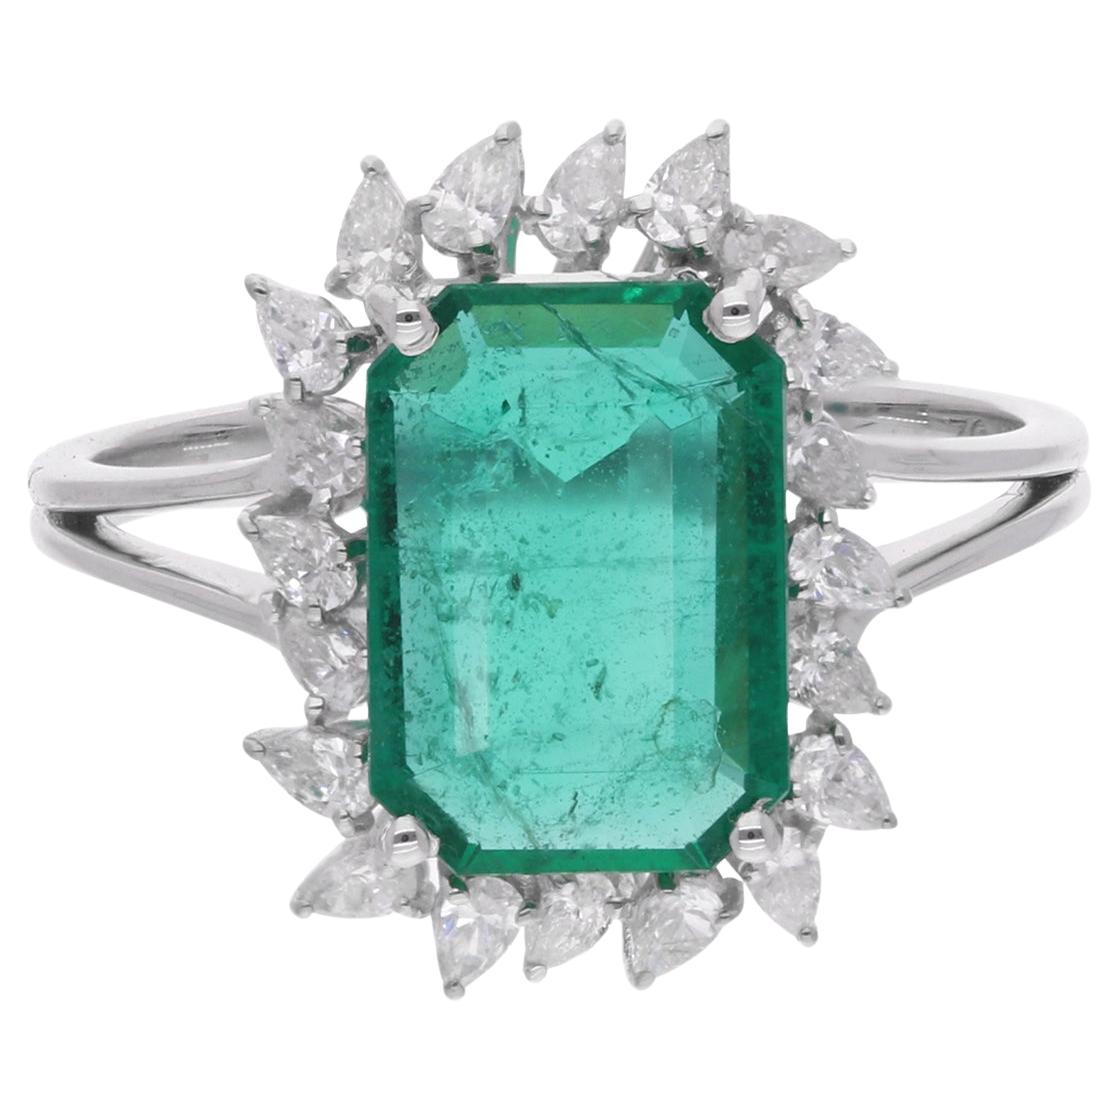 Zambian Emerald Gemstone Cocktail Ring Pear Diamond 18 Karat White Gold Jewelry